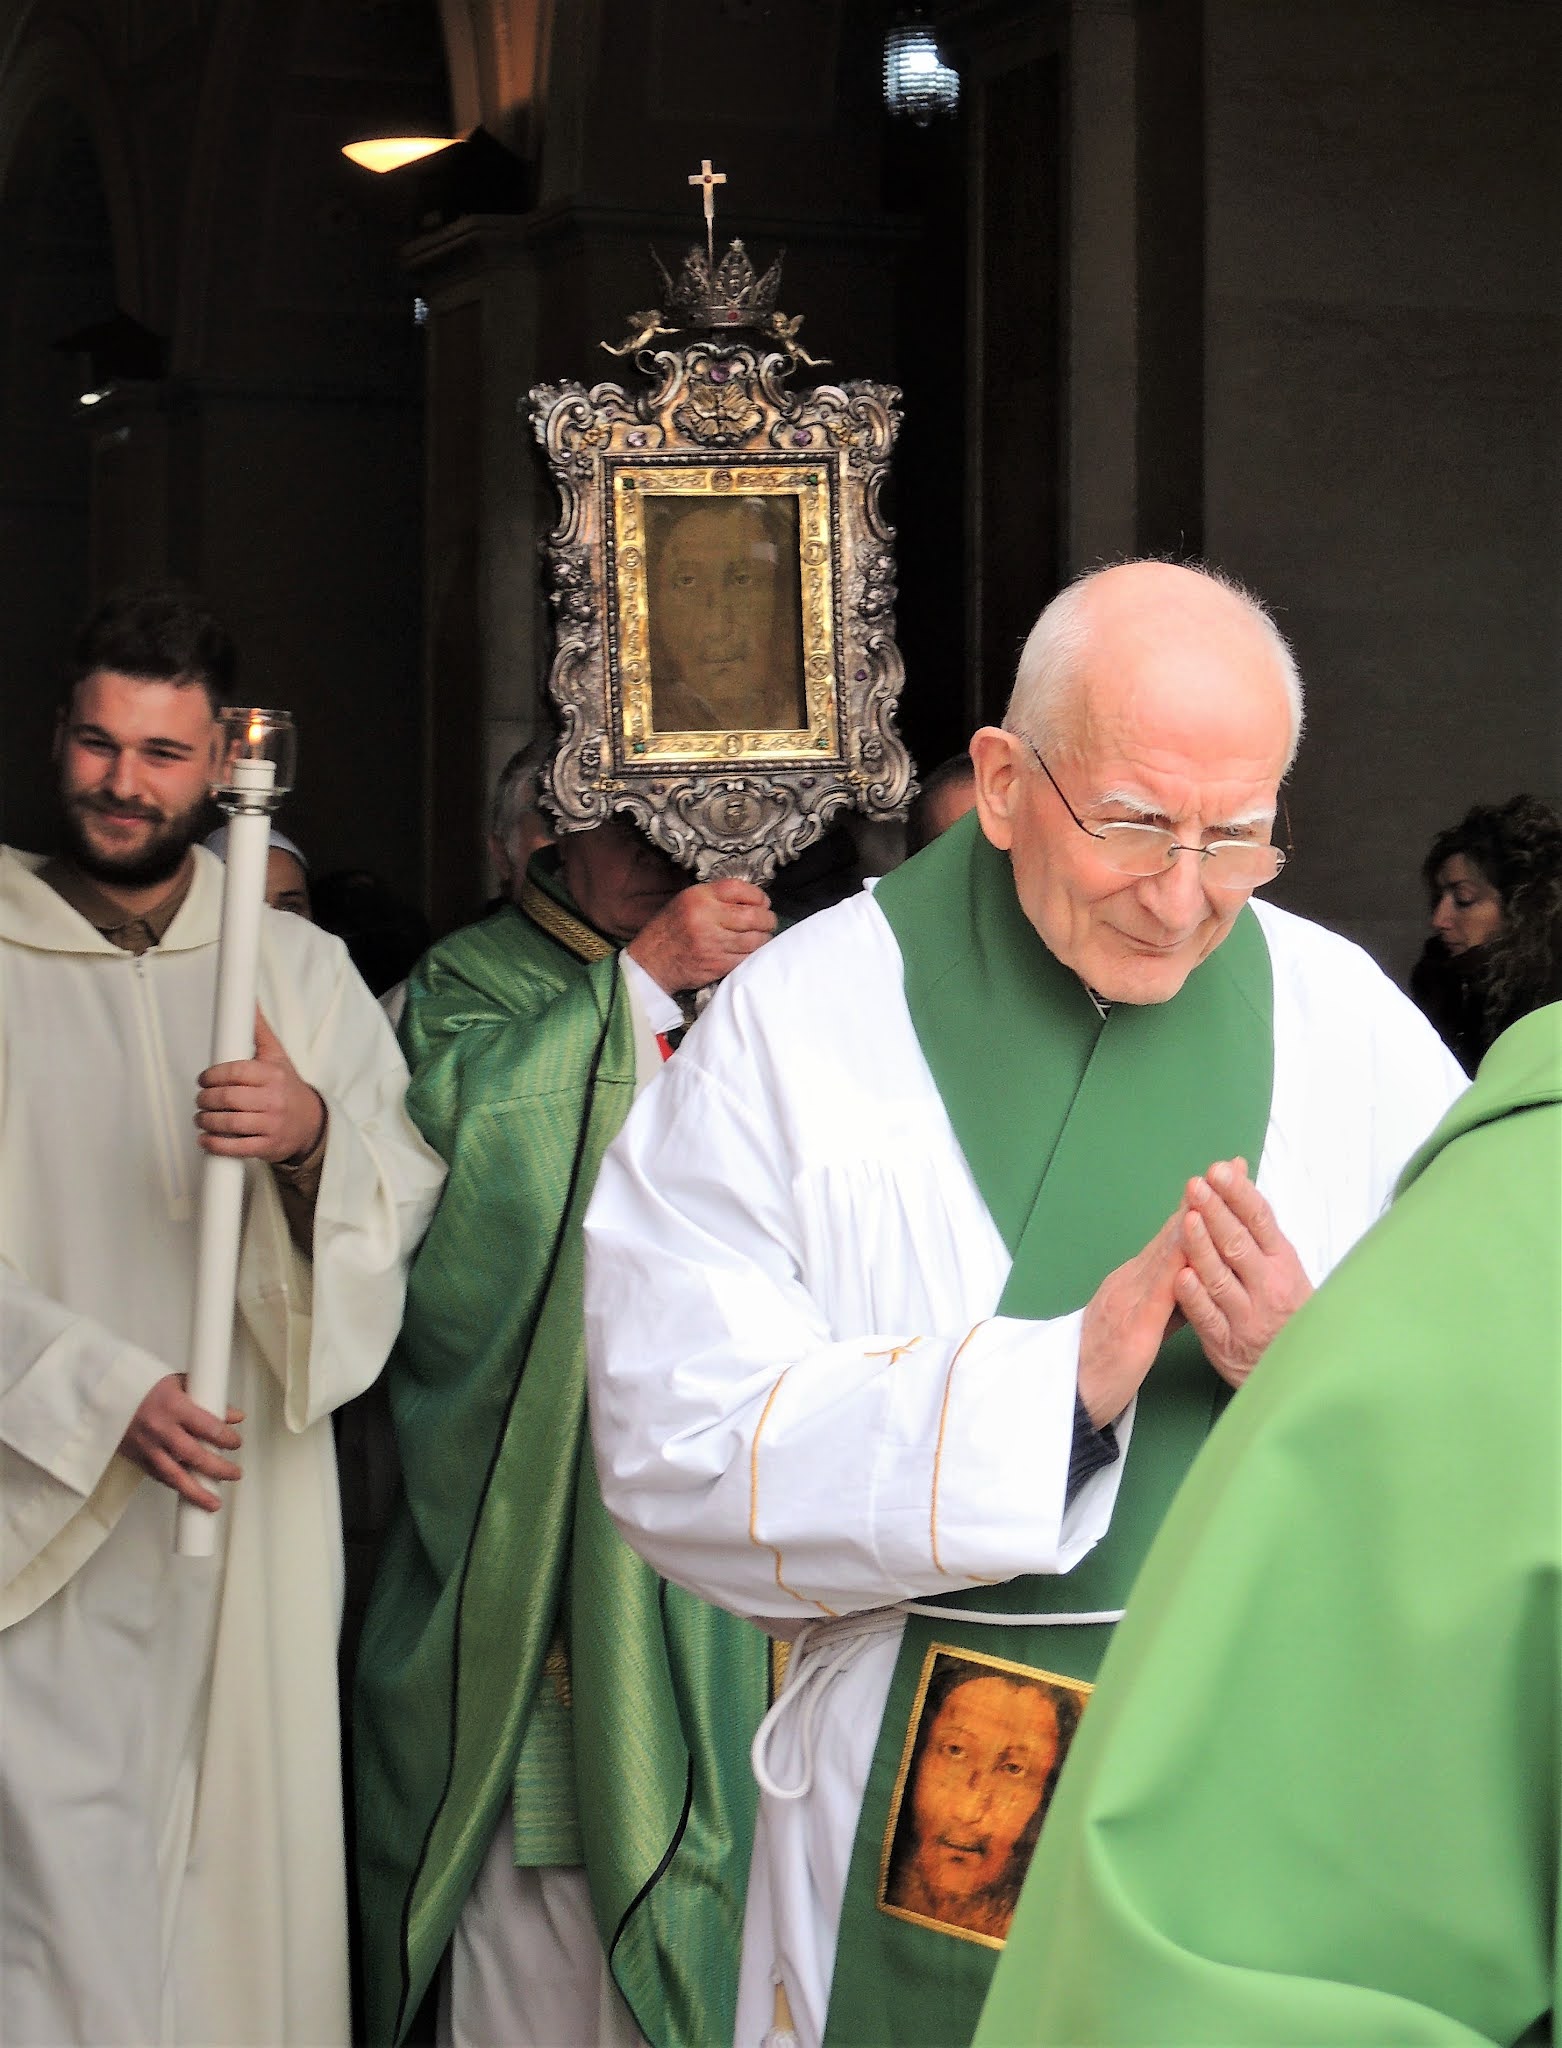 Holy Face of Manoppello: Fr. Heinrich Pfeiffer, ., .